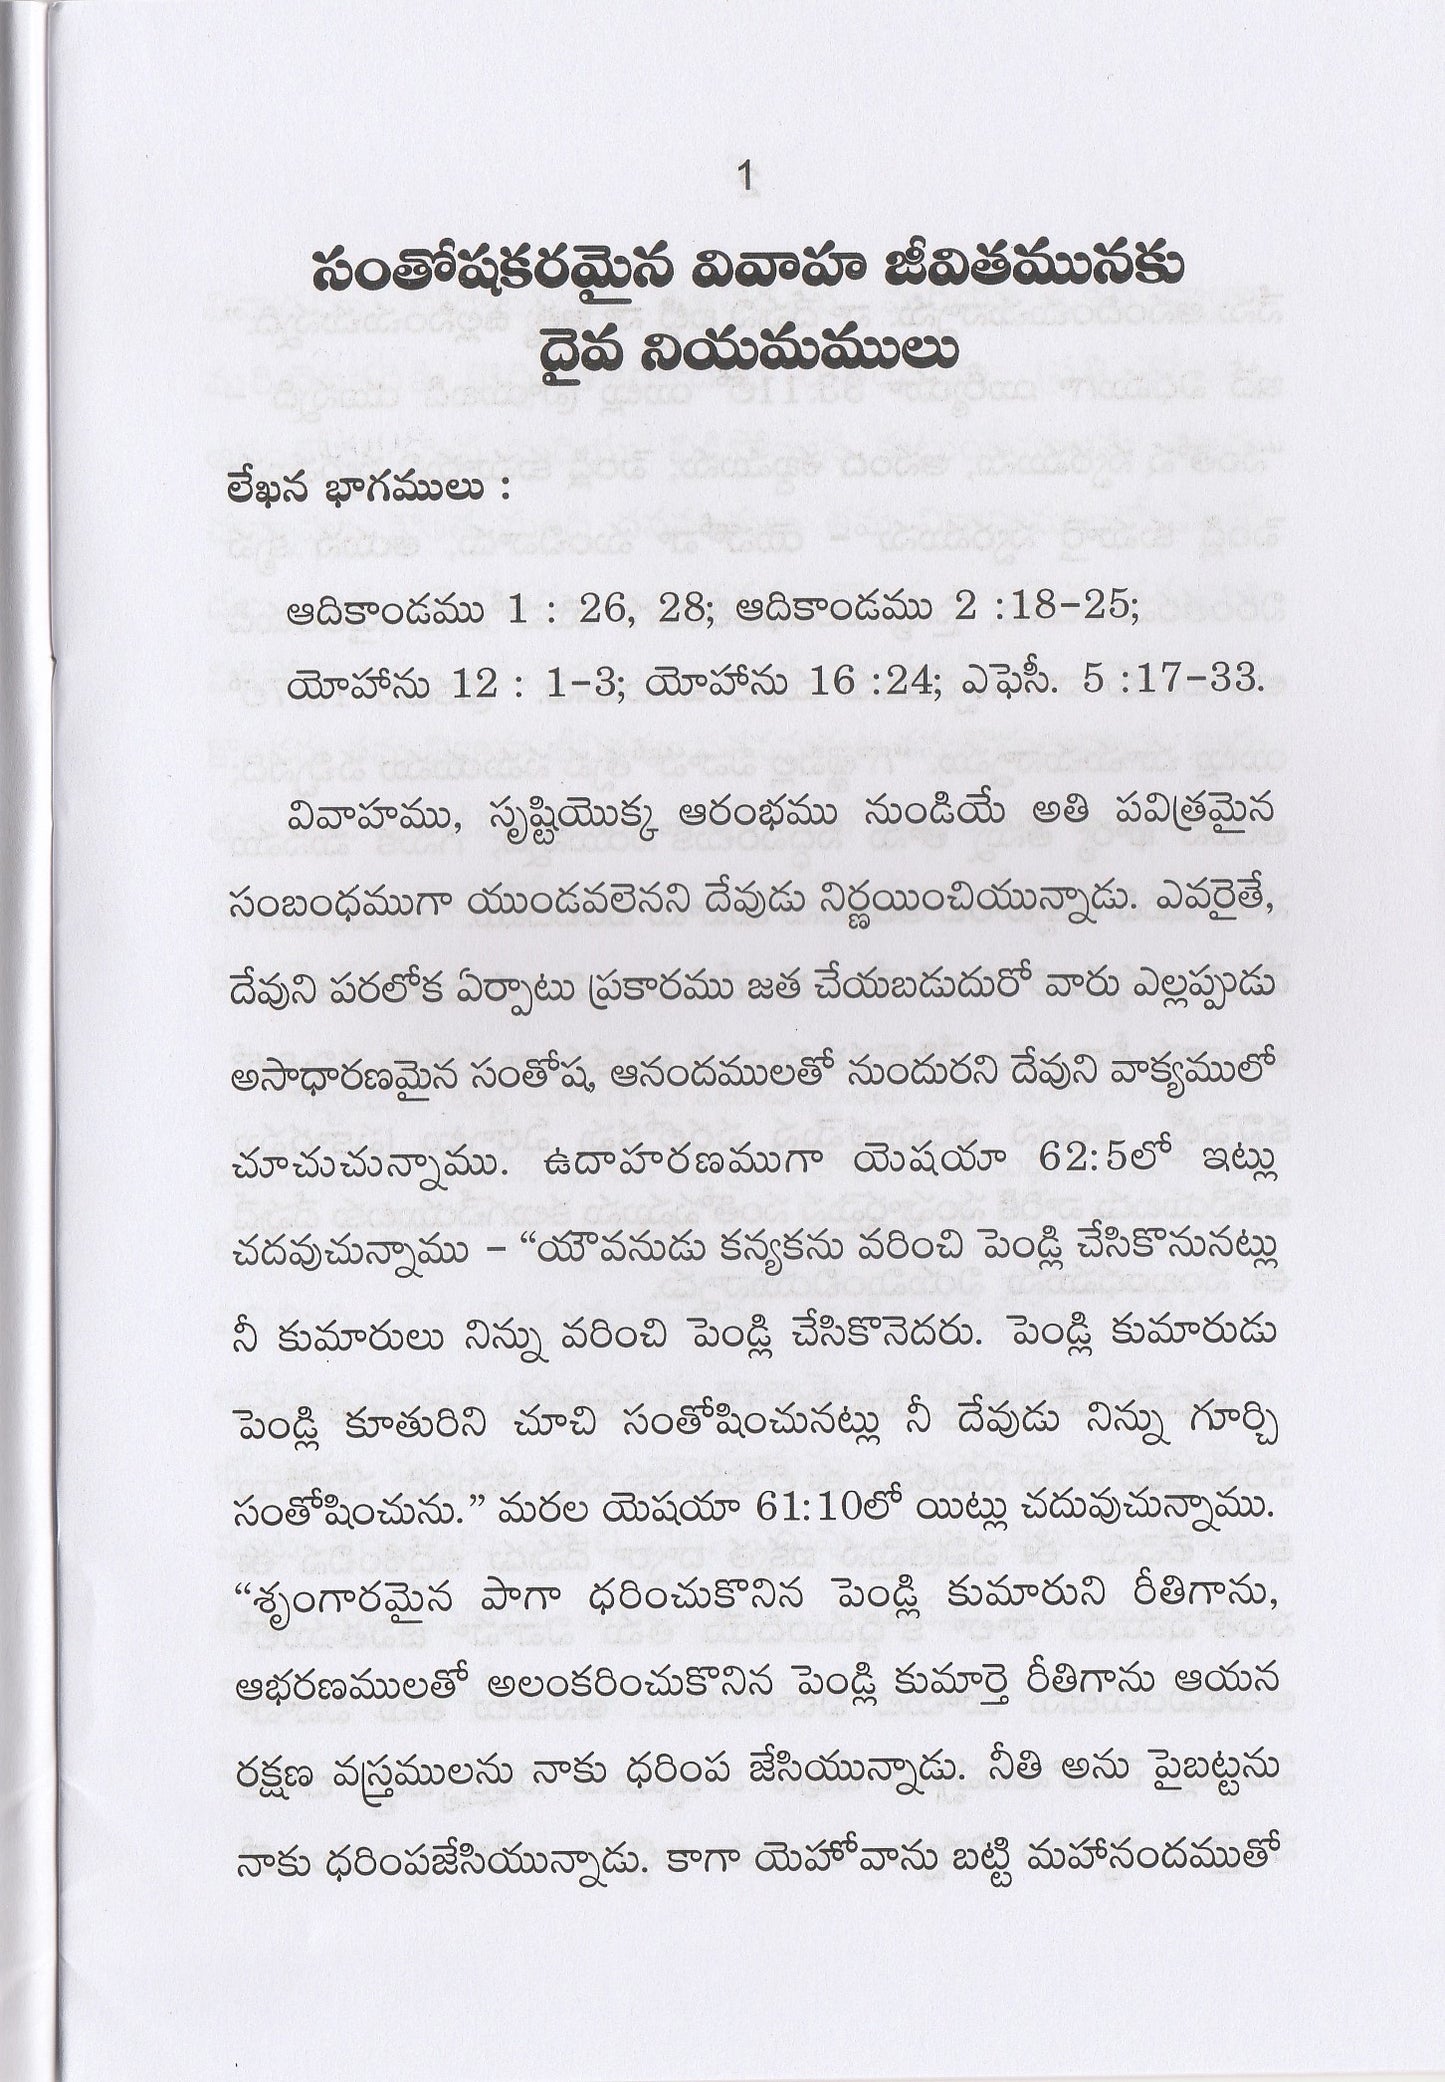 Divine Principles For A Happy Married Life by Bakht Singh in Telugu | Telugu Bakht Singh Books | Telugu Christian Books